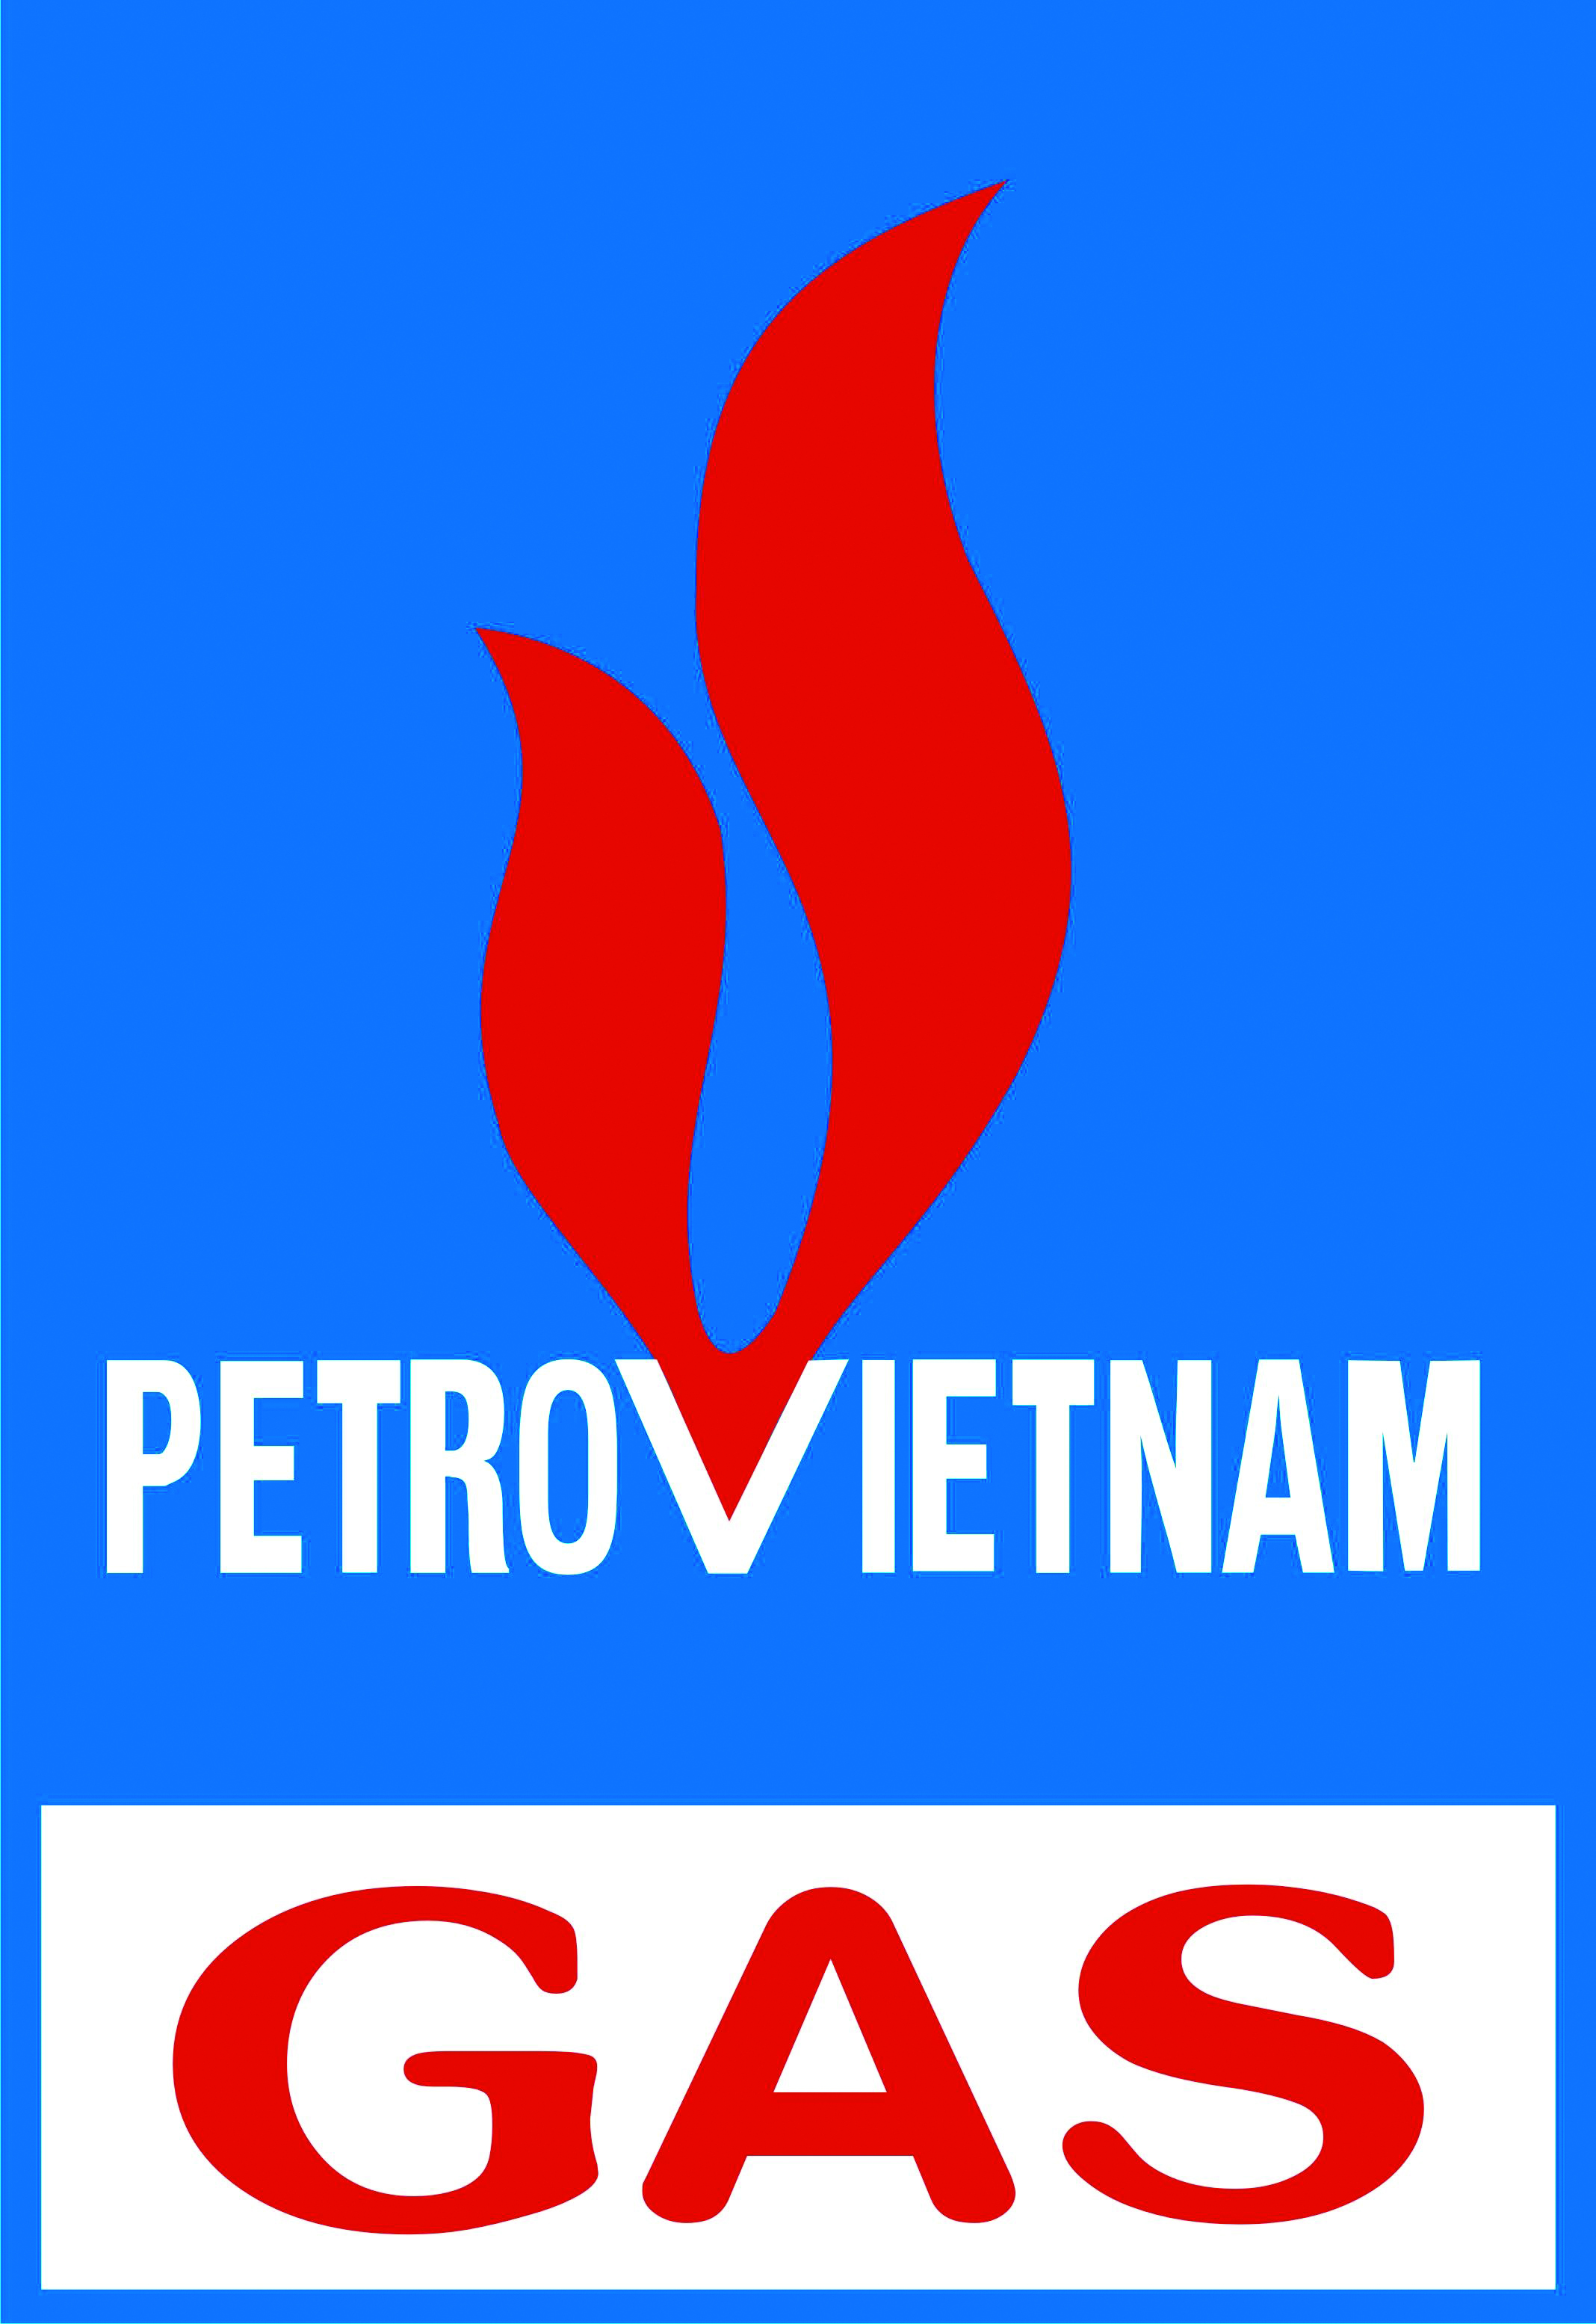 Petrovietnam Logo PNG - 30645